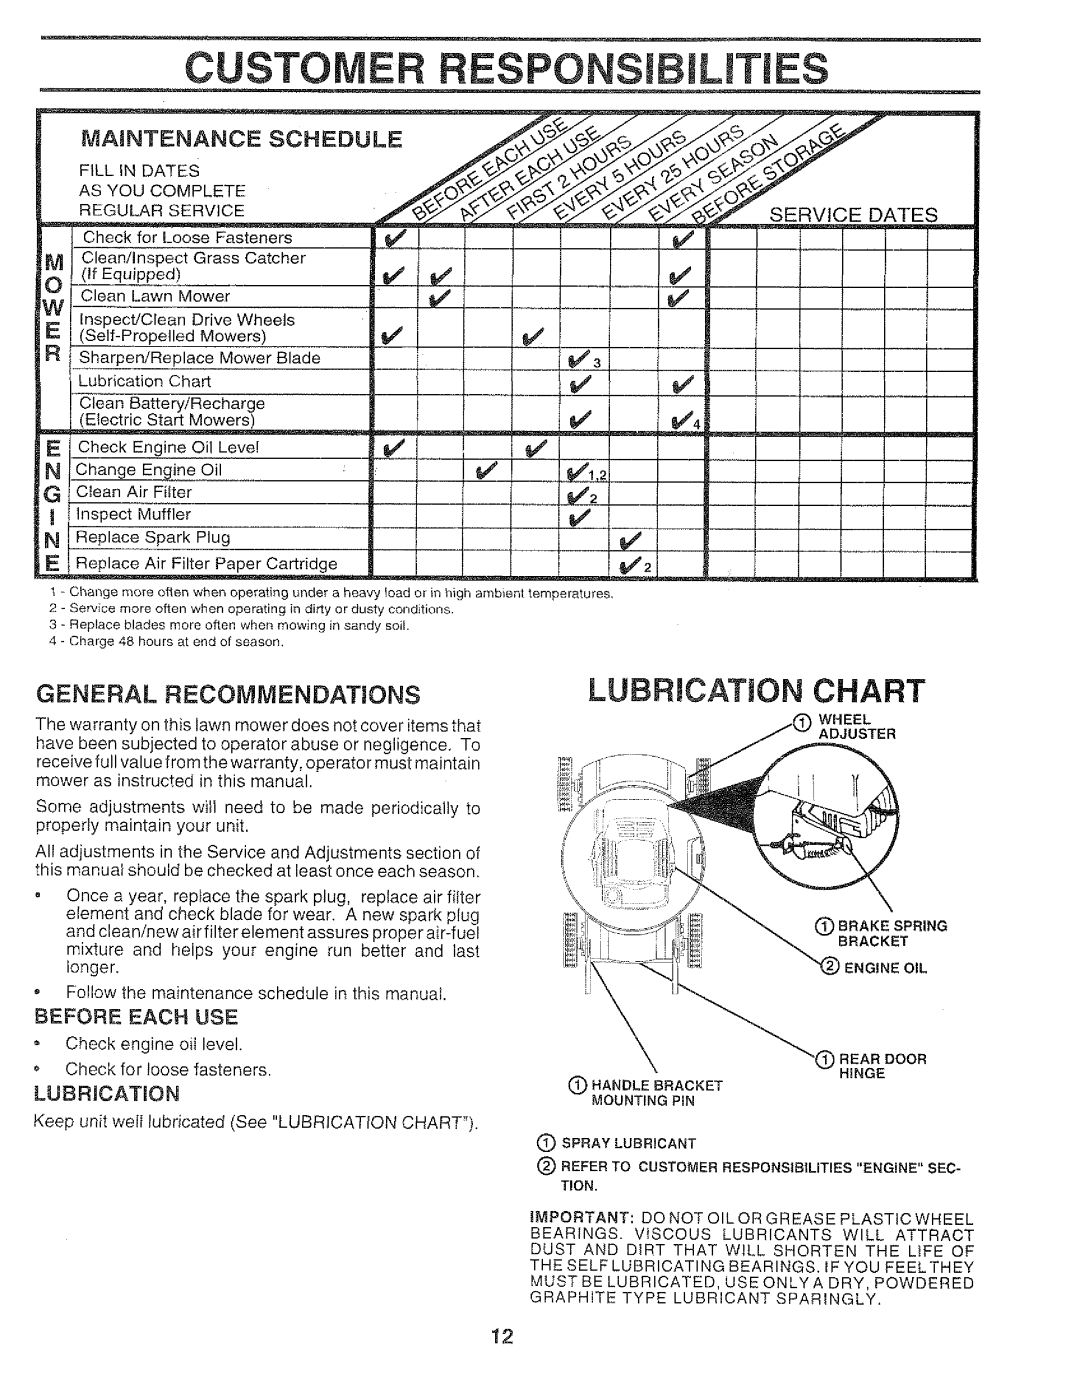 Craftsman 917.37459 owner manual Customer, Responsibilities, LUBRmCATaON CHART, Maintenance, Schedule, LUBRiCATiON 